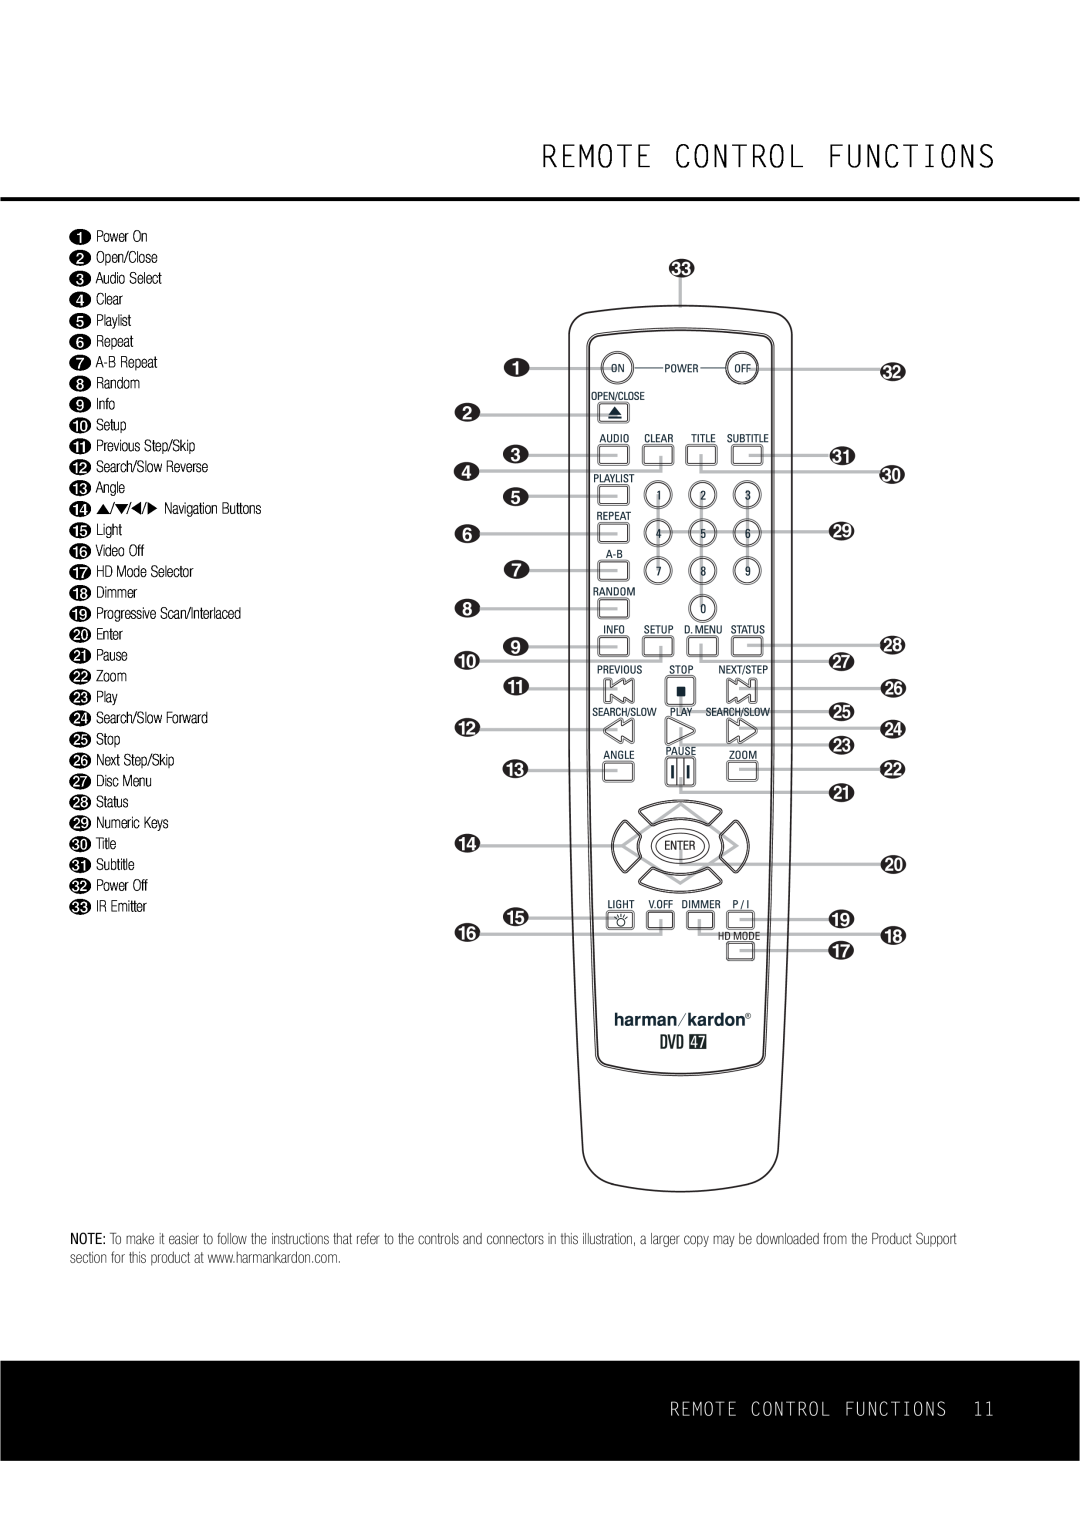 Harman-Kardon DVD47 owner manual Remote Control Functions, 0 1 